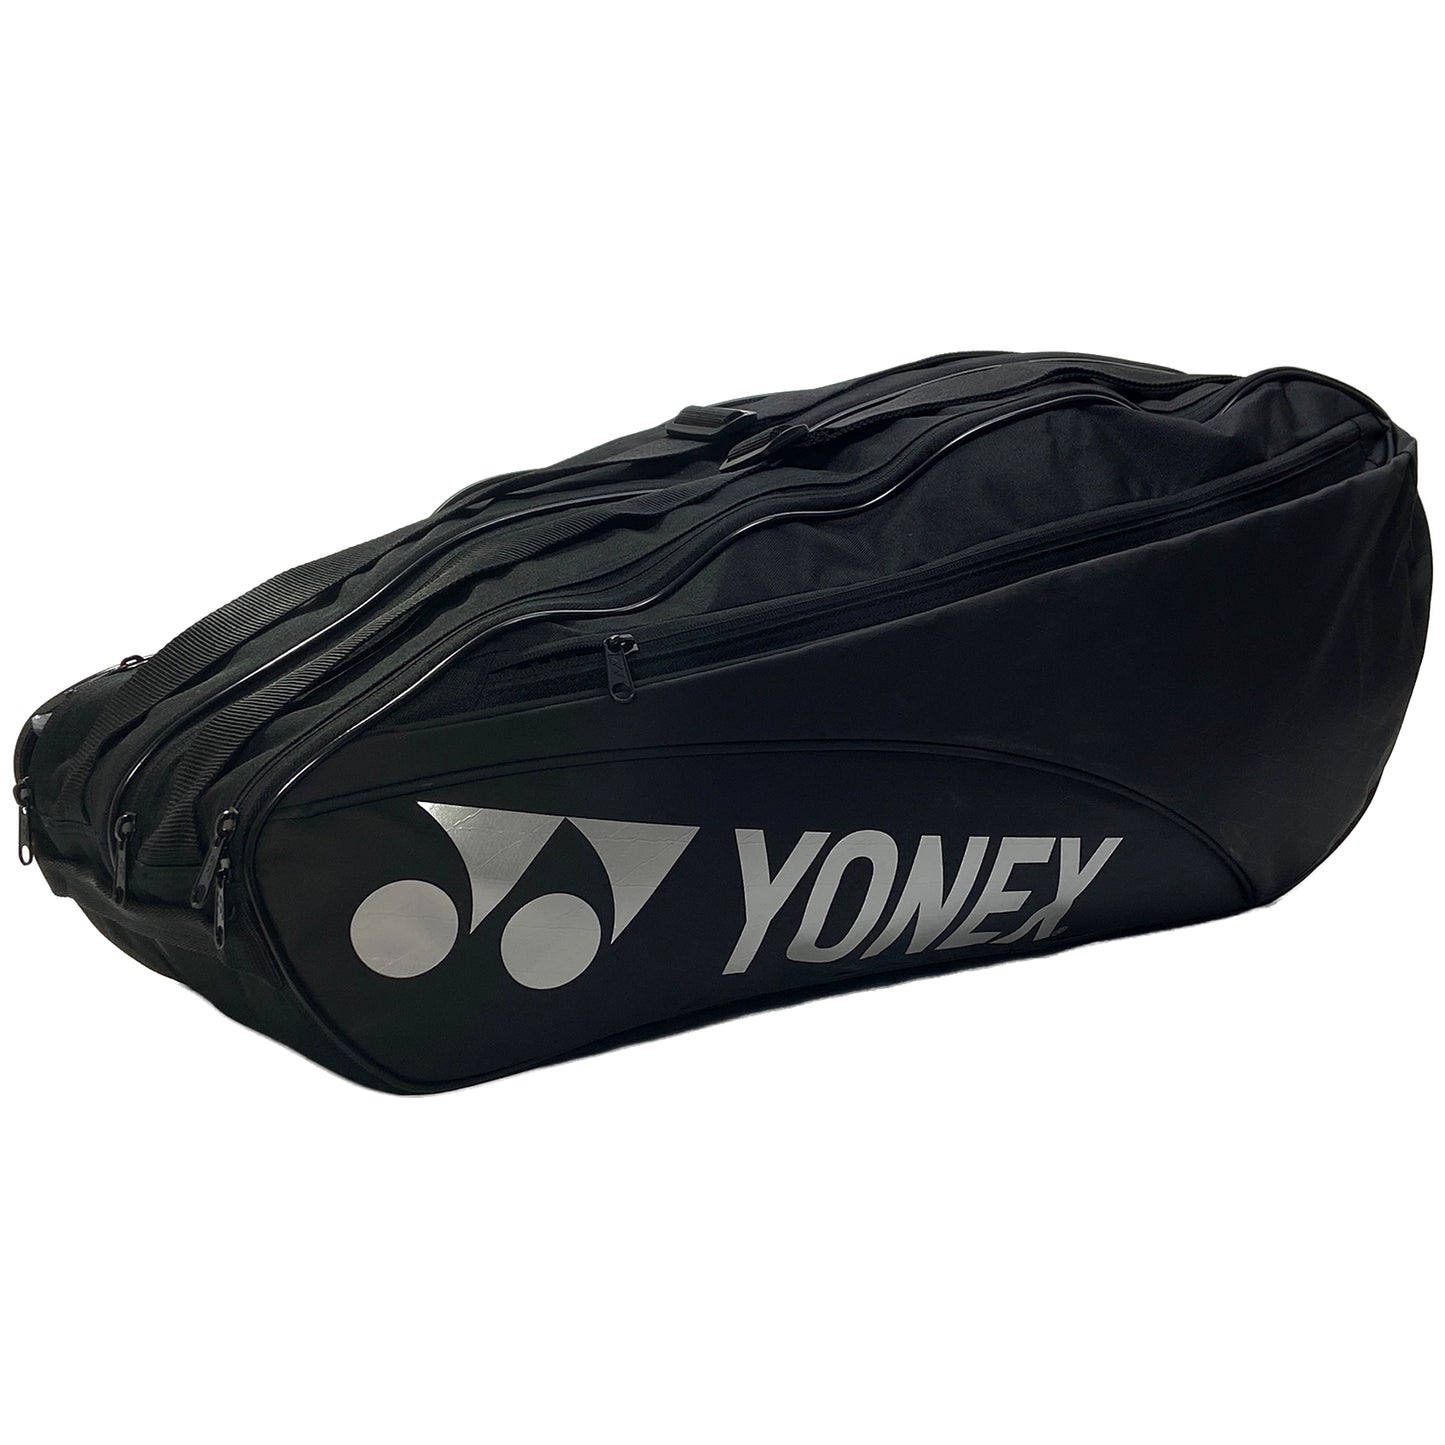 Yonex sac Team 6 Raquettes (BAG42326) Noir